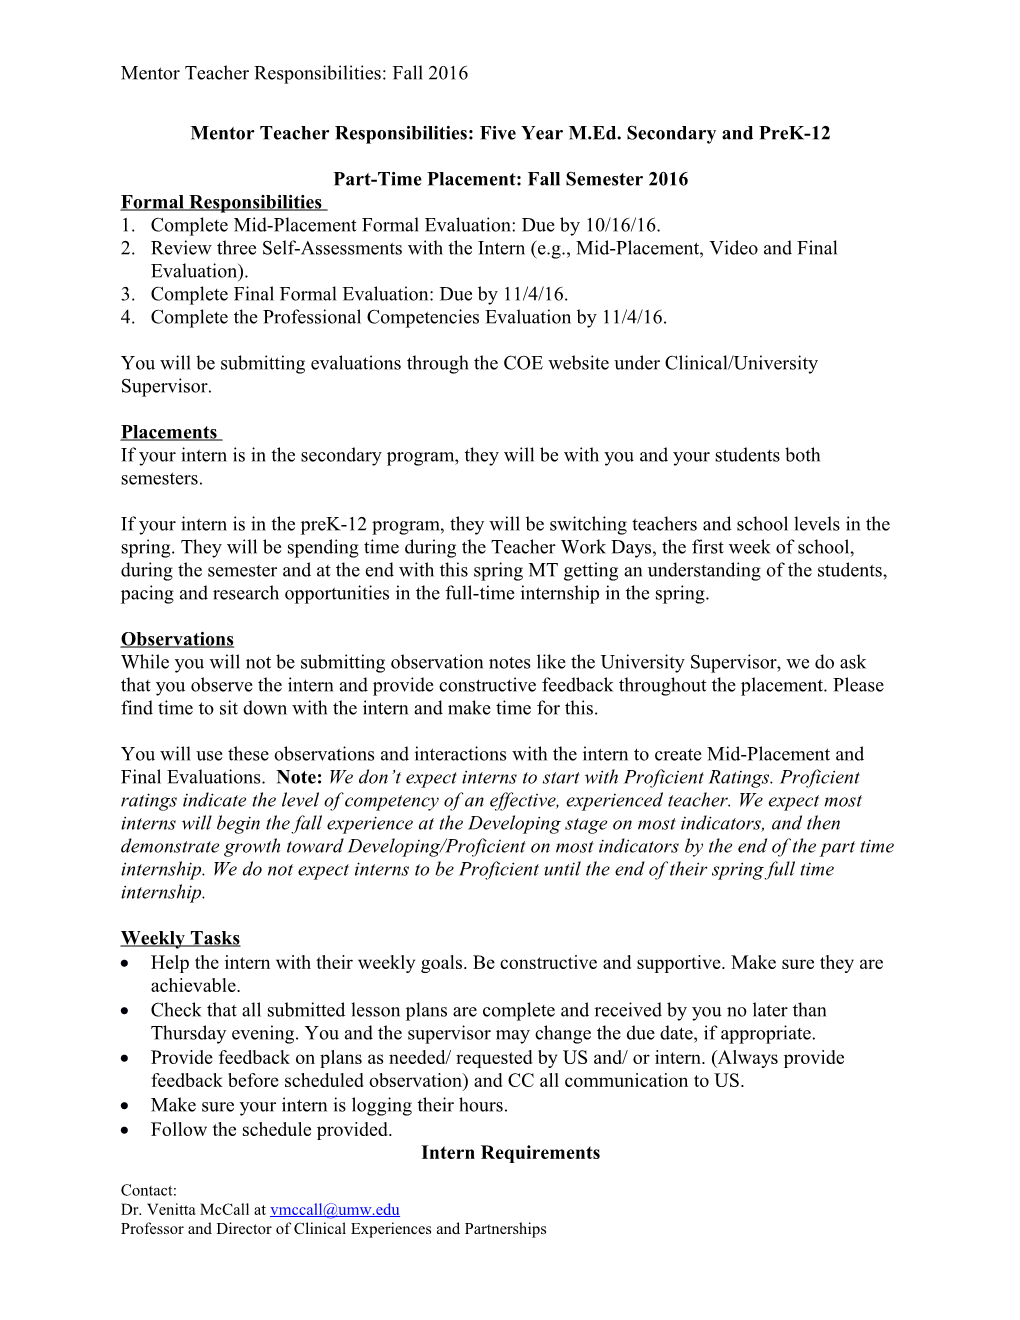 Mentor Teacher Responsibilities: Five Year M.Ed. Secondary and Prek-12